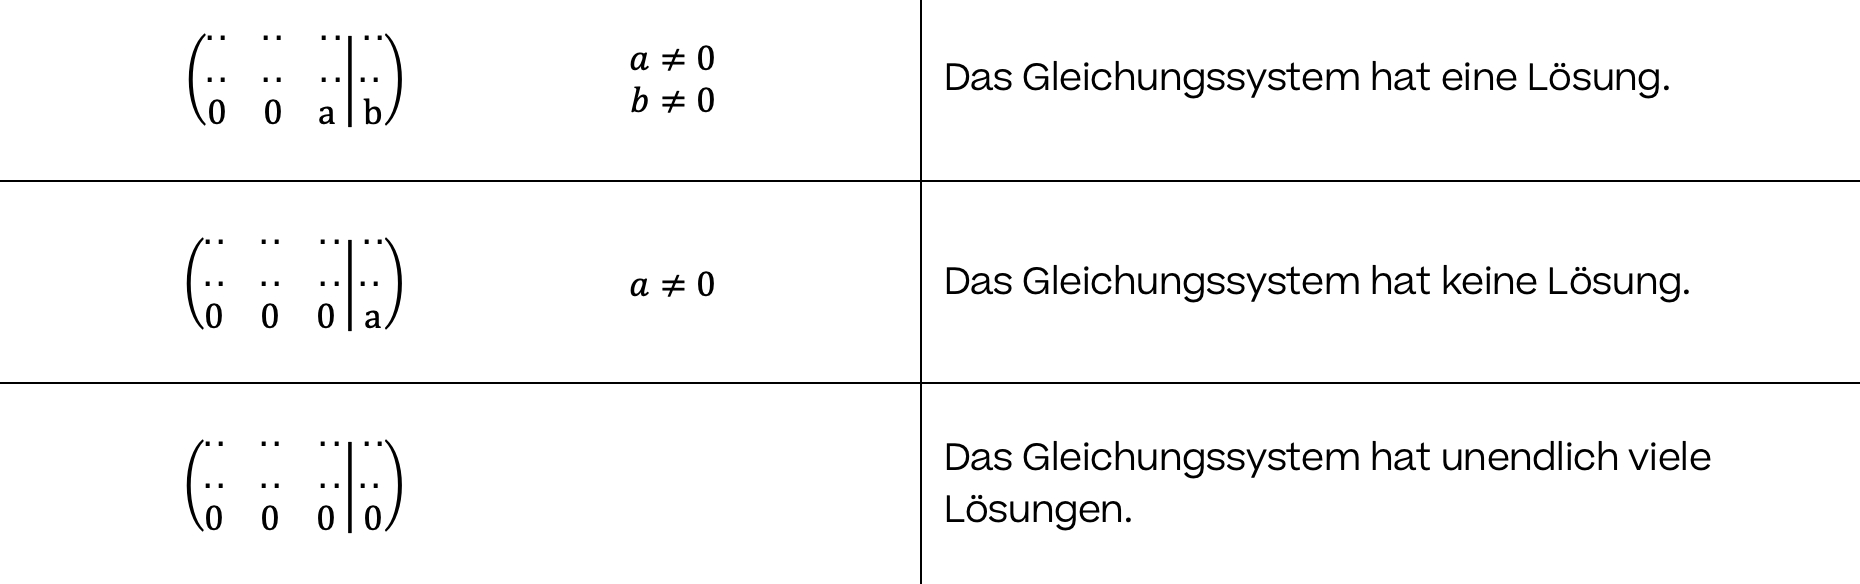 Mathematik; Lineare Gleichungssysteme; 11.-12. Klasse Gymnasium; Lineare Gleichungssysteme & Gauß Verfahren